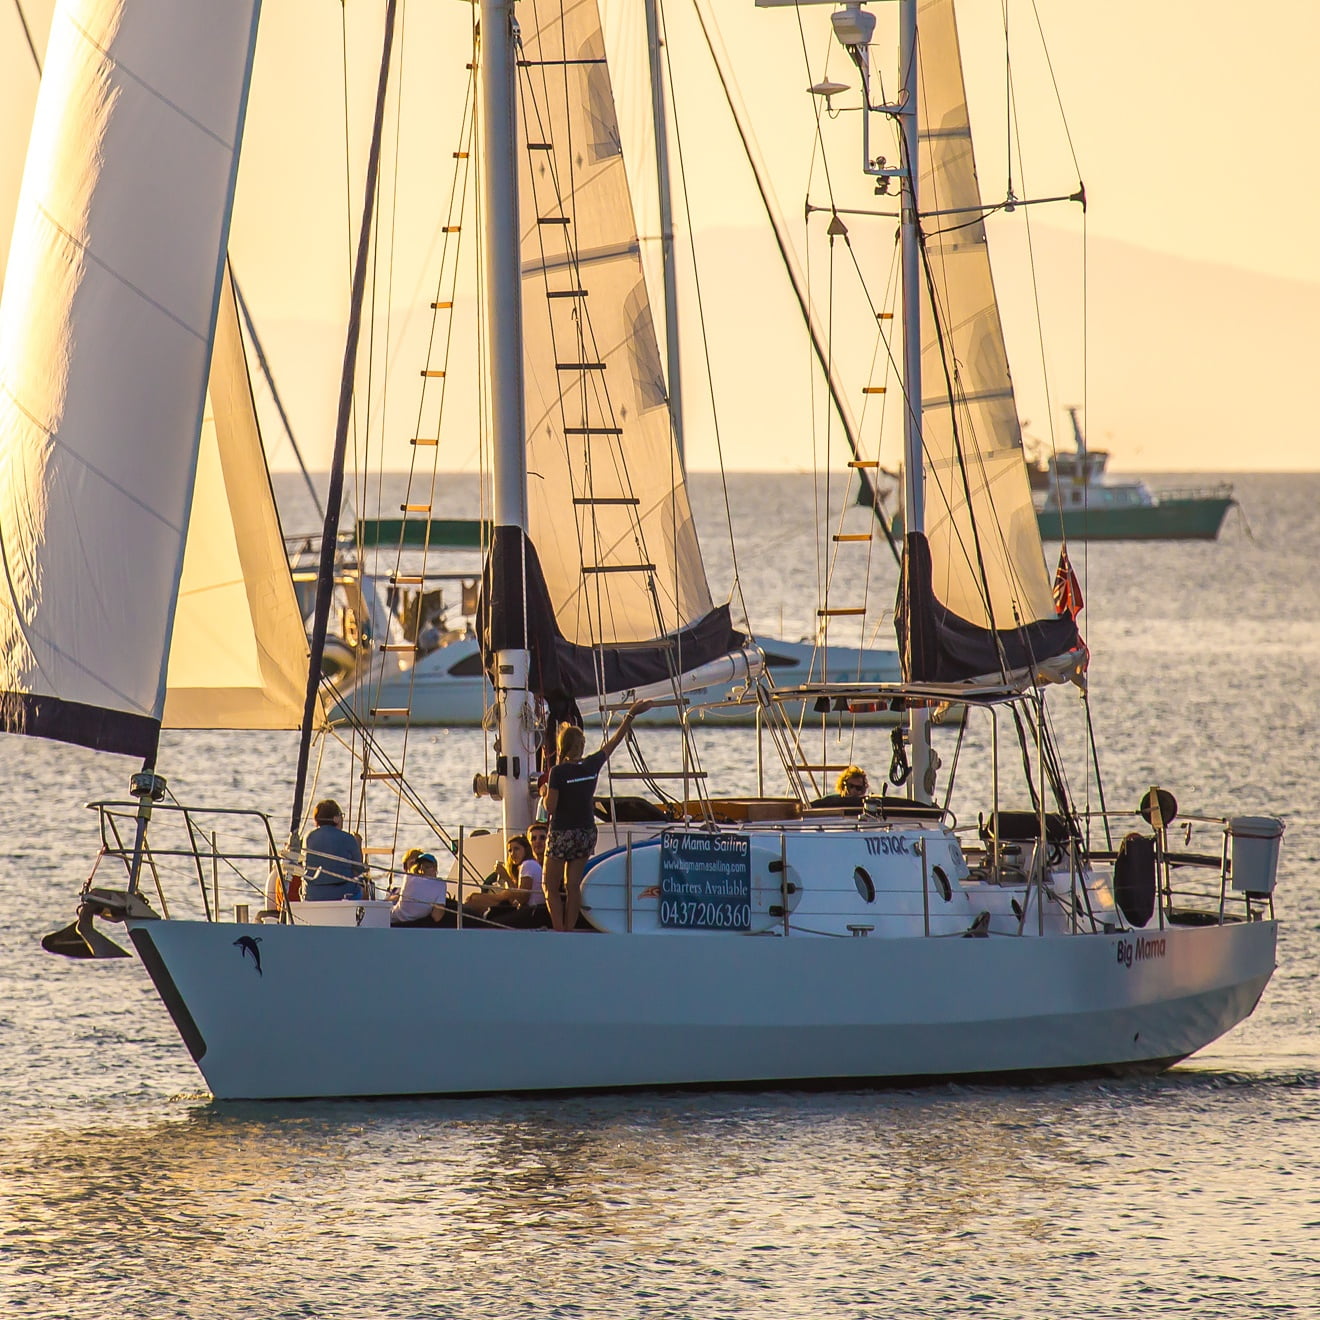 sunset sailboat company